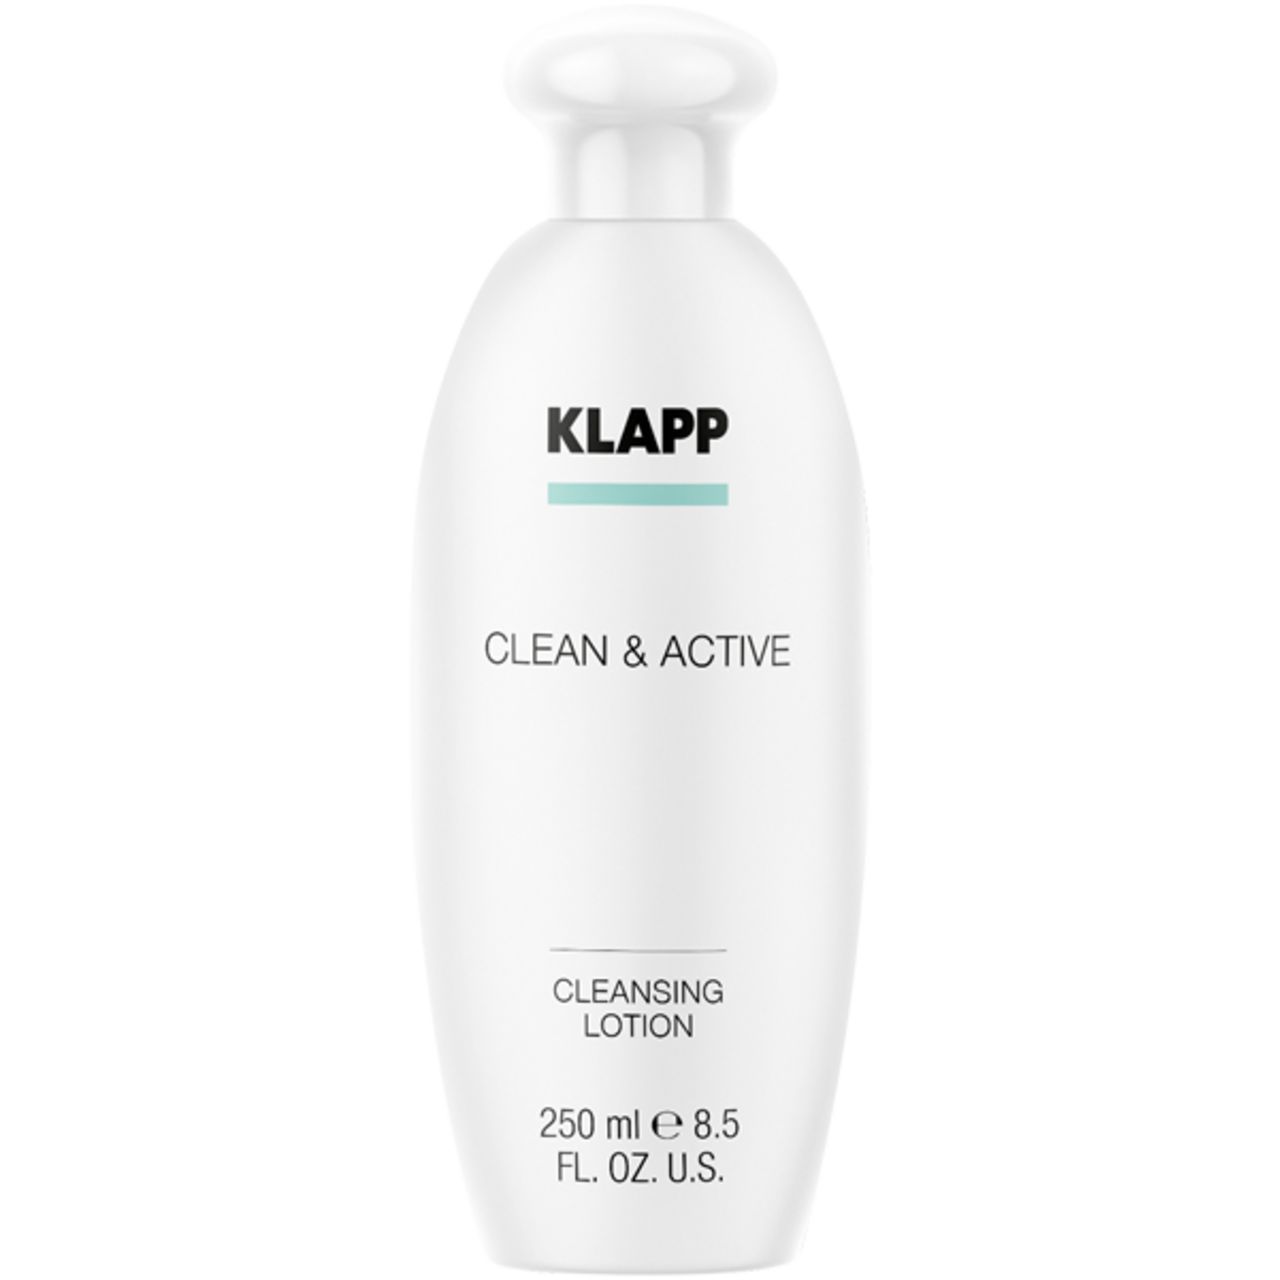 Klapp, Clean & Active Cleansing Lotion